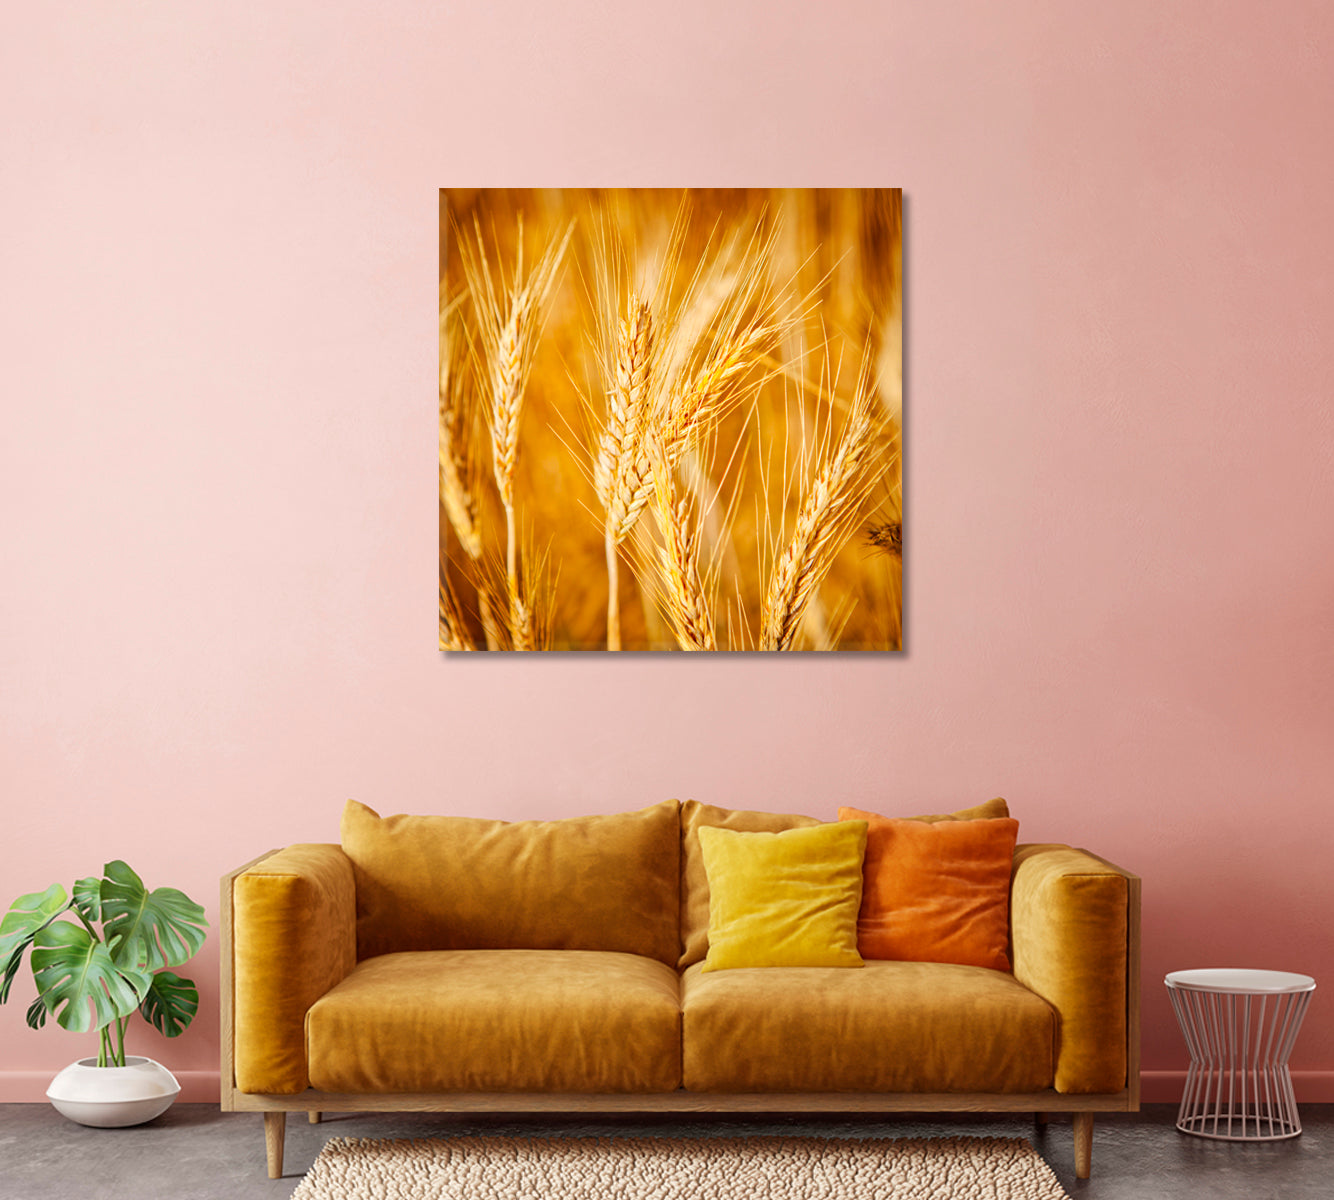 Golden Wheat Field Canvas Print-Canvas Print-CetArt-1 panel-12x12 inches-CetArt